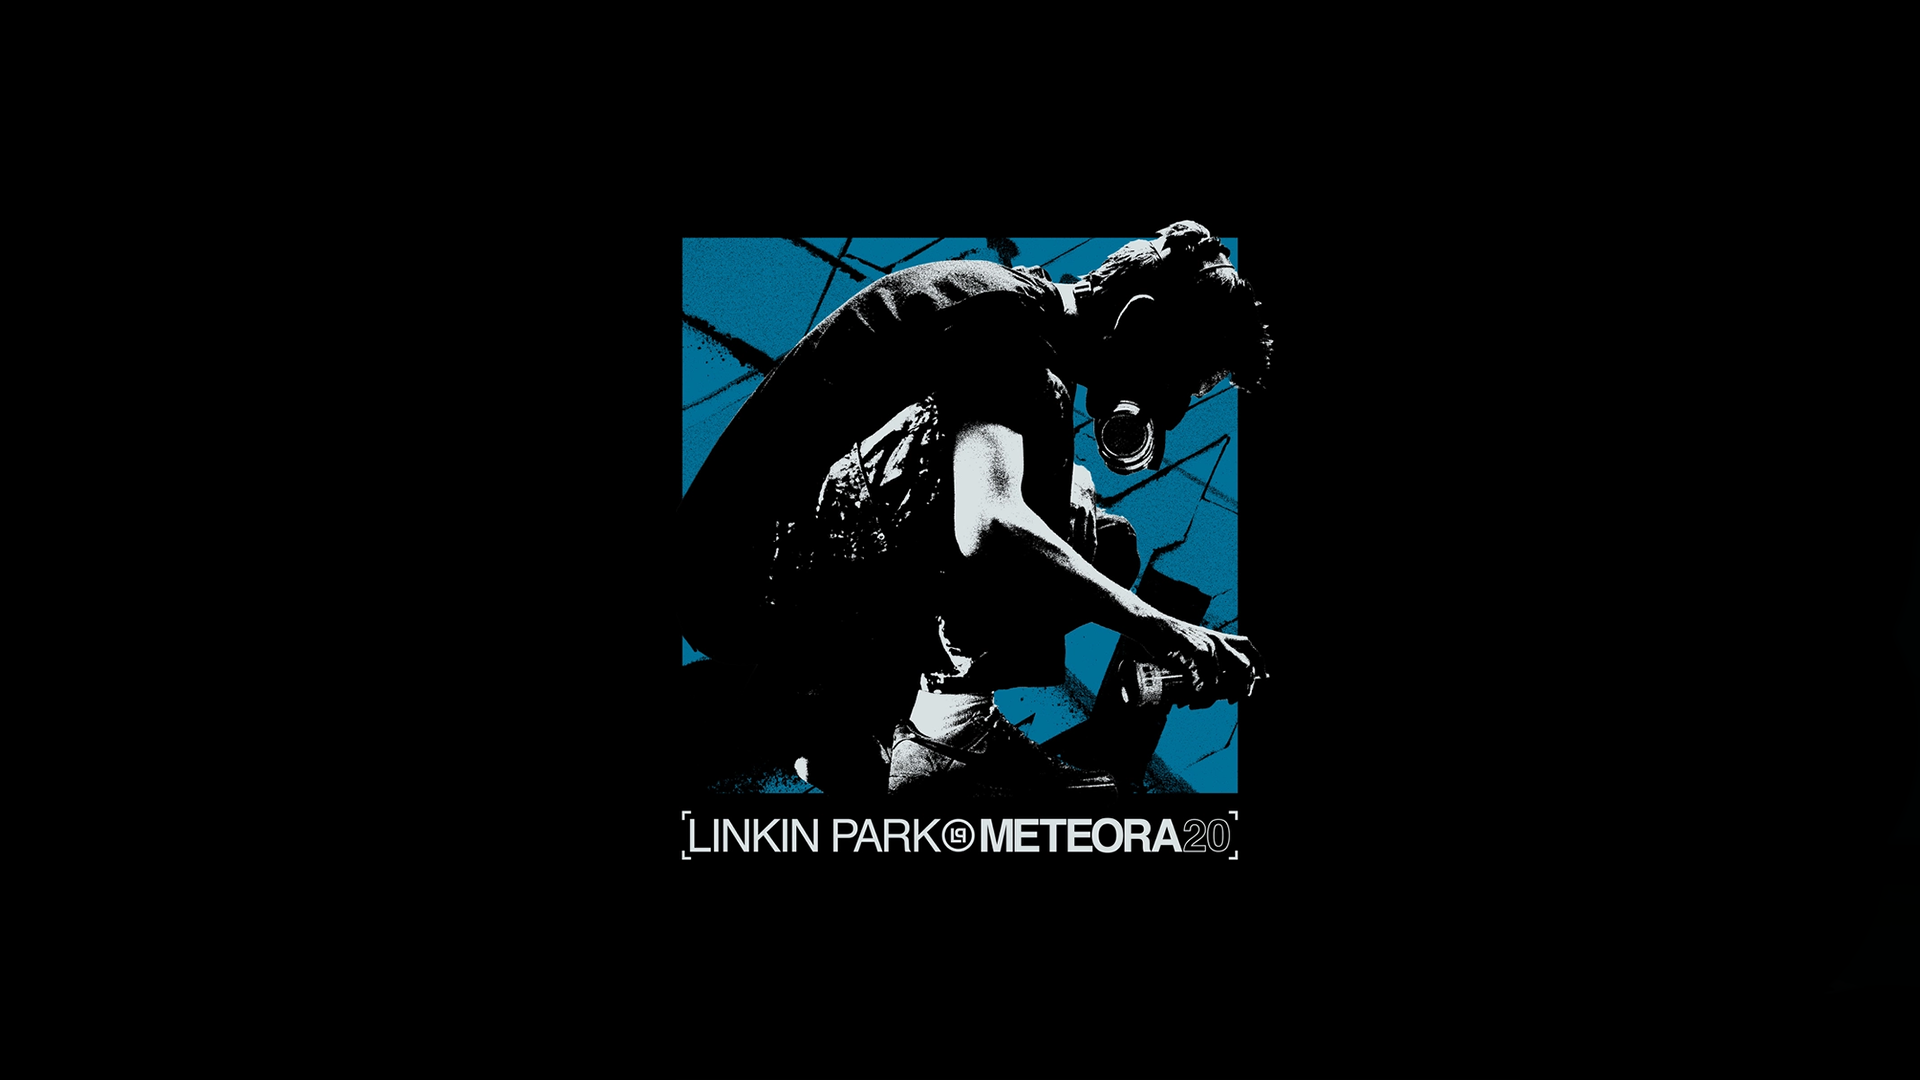 Linkin Park Meteora Black Blue Stencil Rock Bands Minimalism Black Background Simple Background 1920x1080